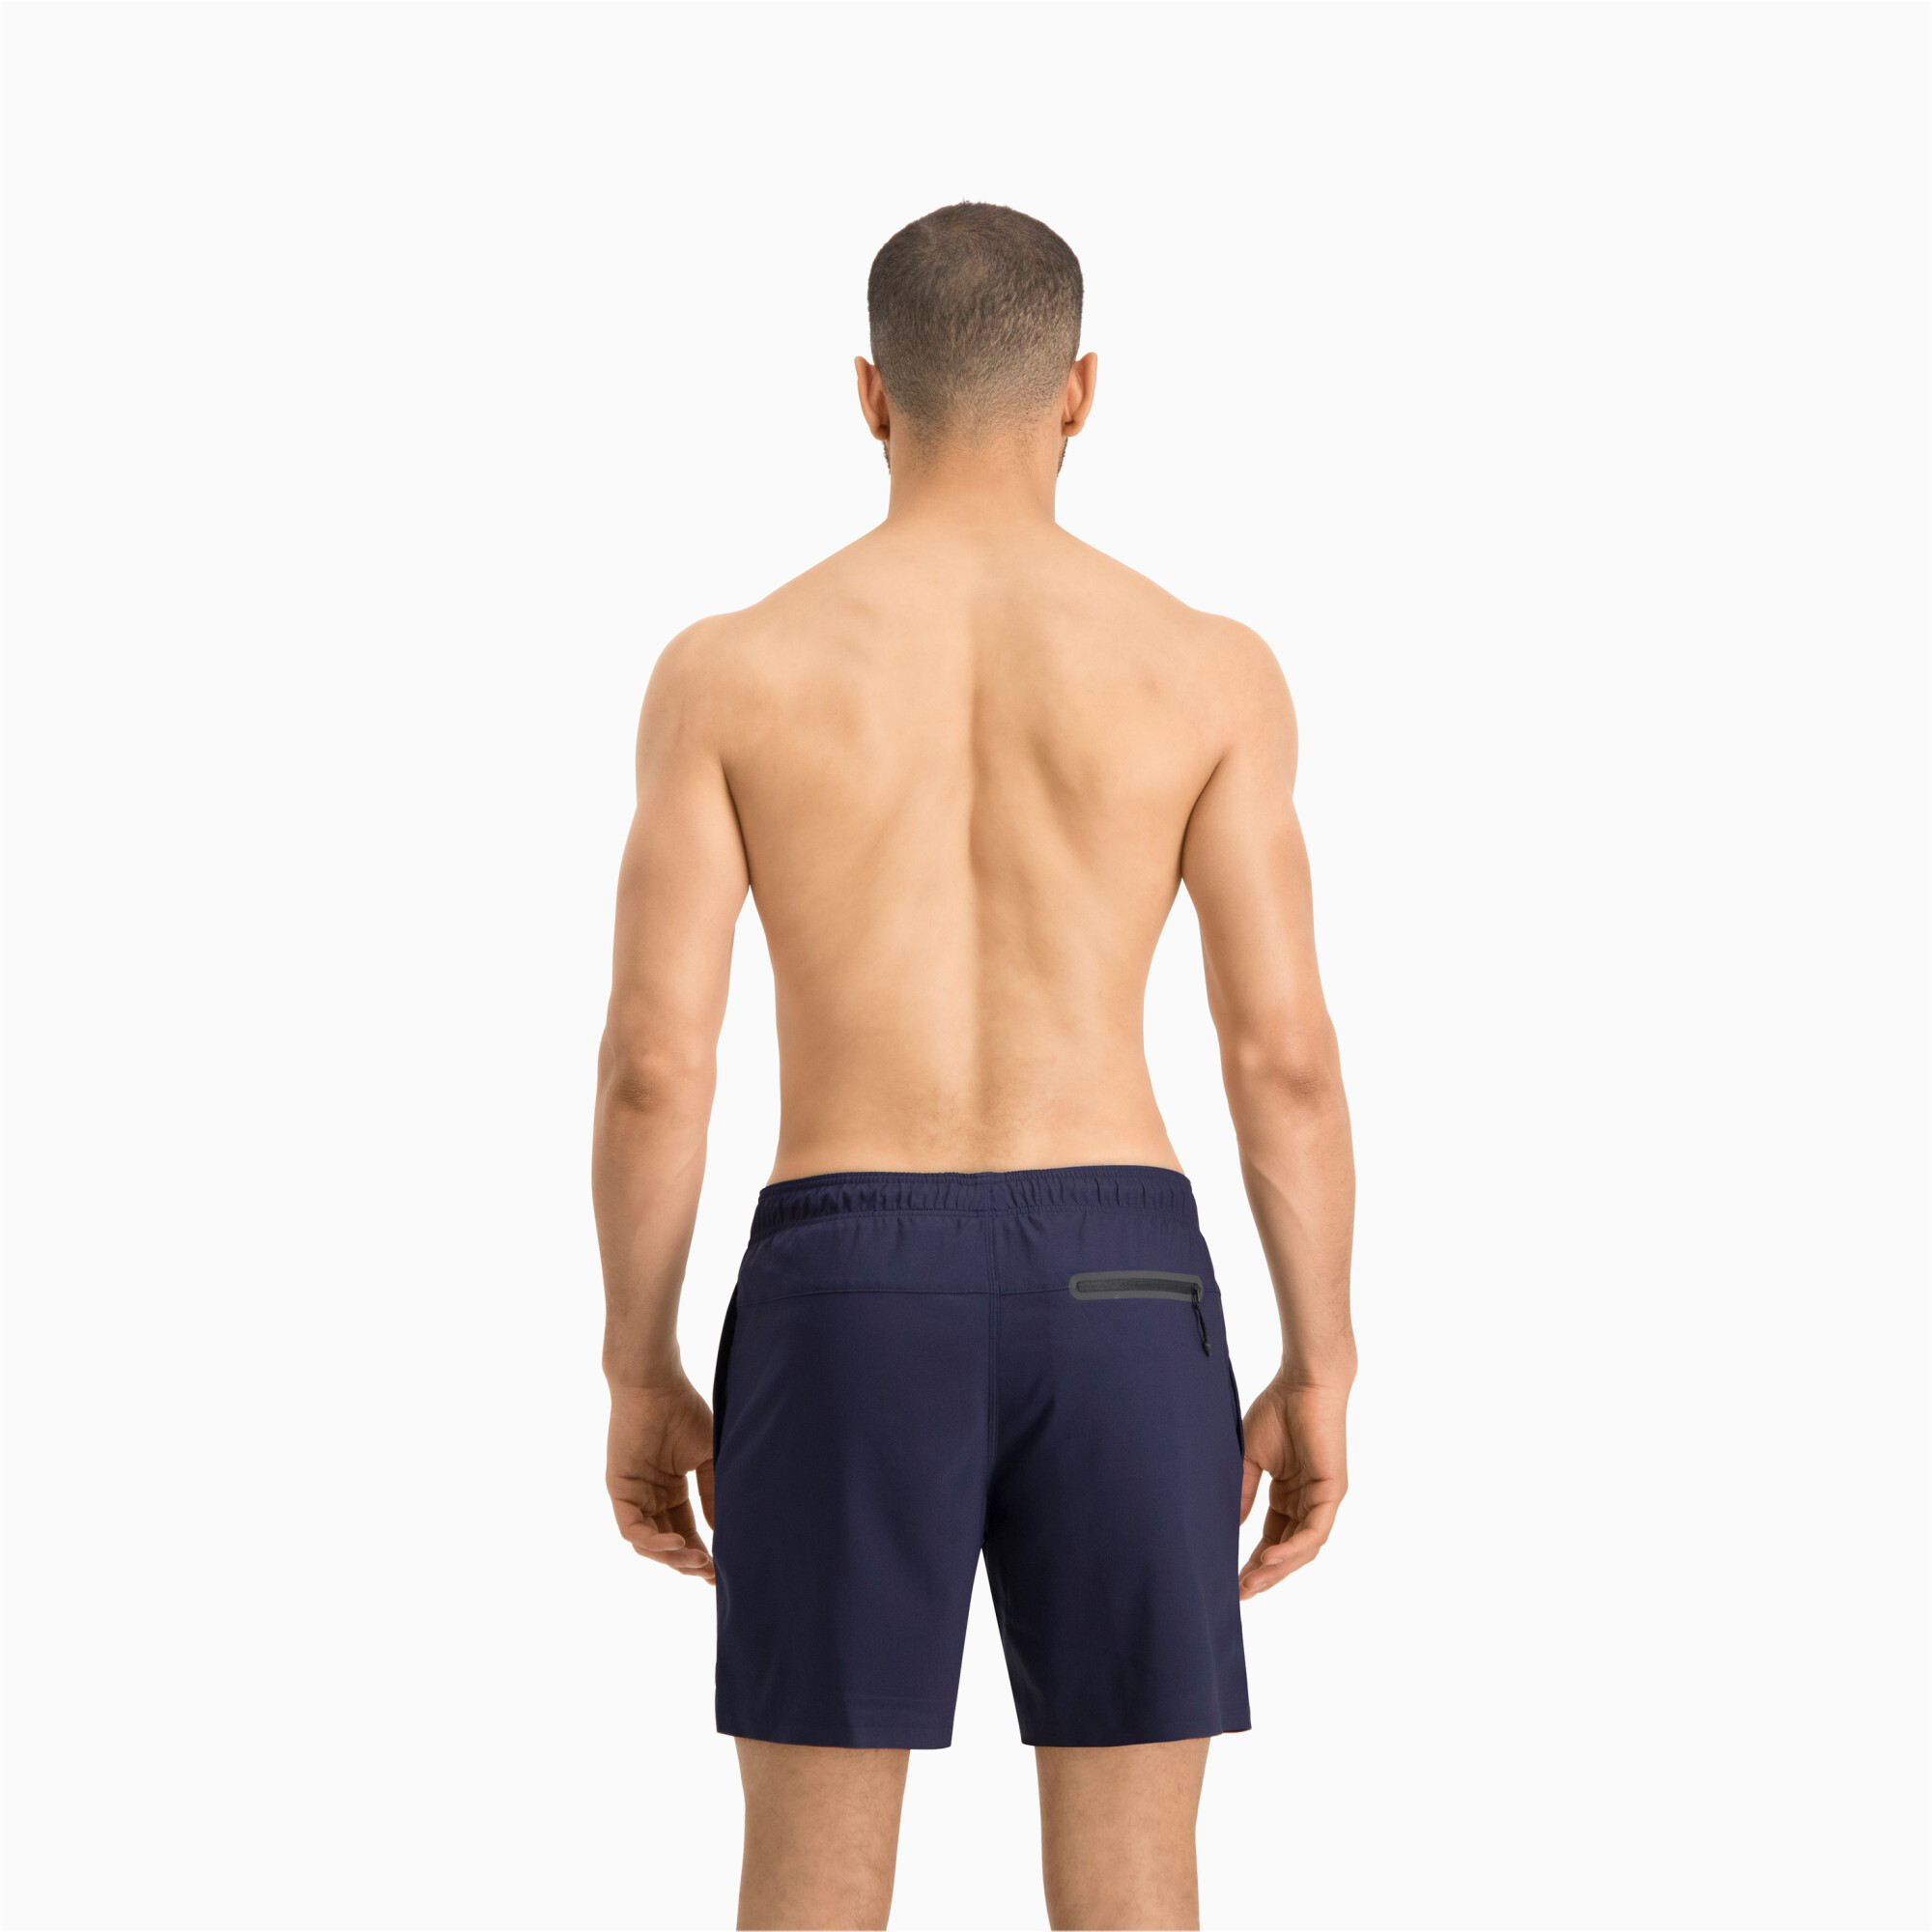 Men's PUMA Swim Mid-Length Swimming Shorts In 80 - Blue, Size Medium